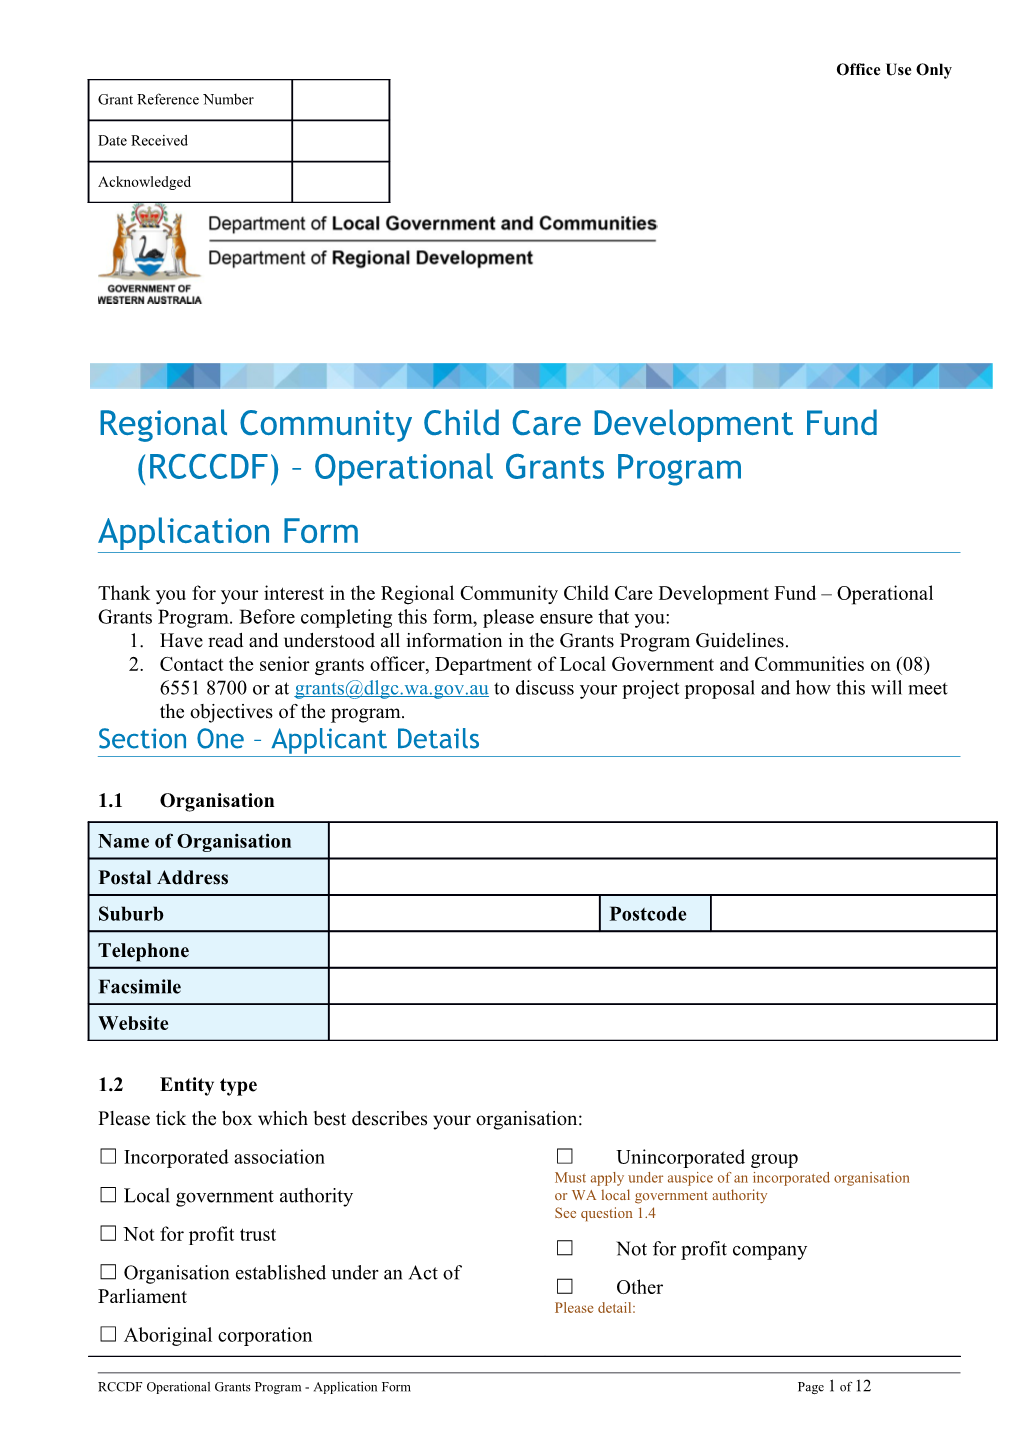 Regional Community Child Care Development Fund ( RCCCDF ) - Operational Grants Program